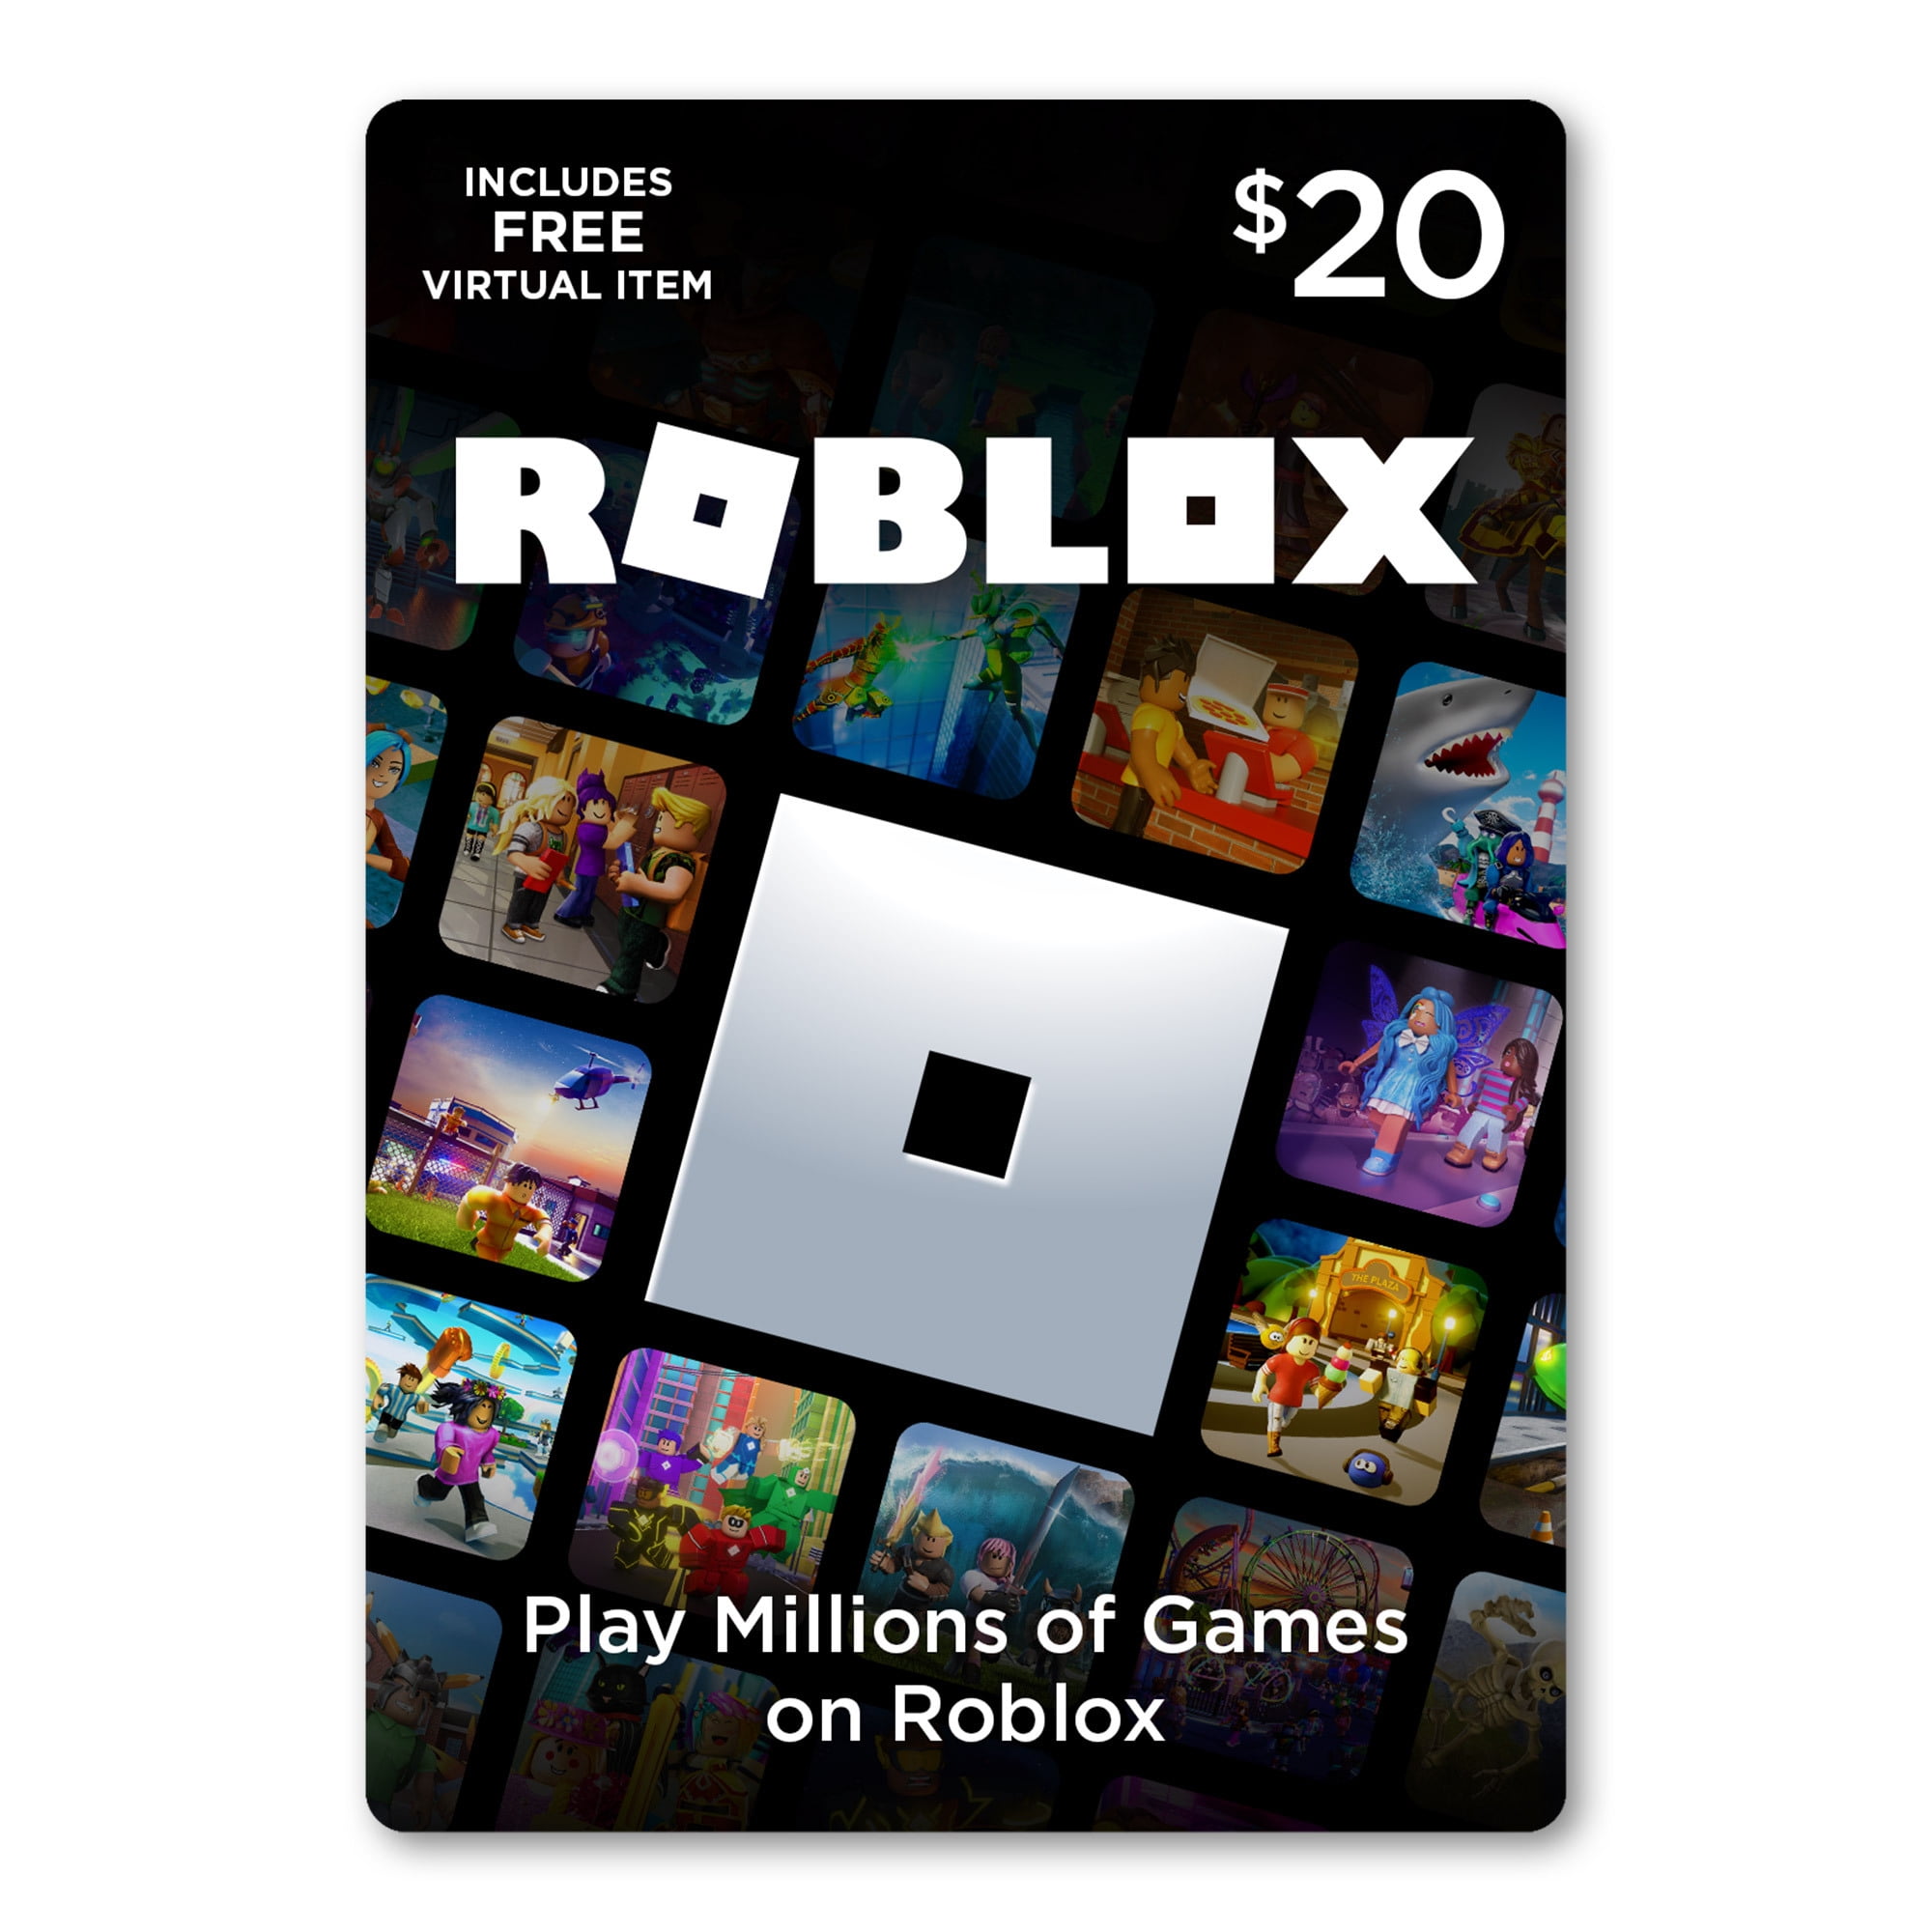 Roblox 20 Digital Gift Card Includes Exclusive Virtual Item Digital Download Walmart Com Walmart Com - 20 dollar roblox gift card